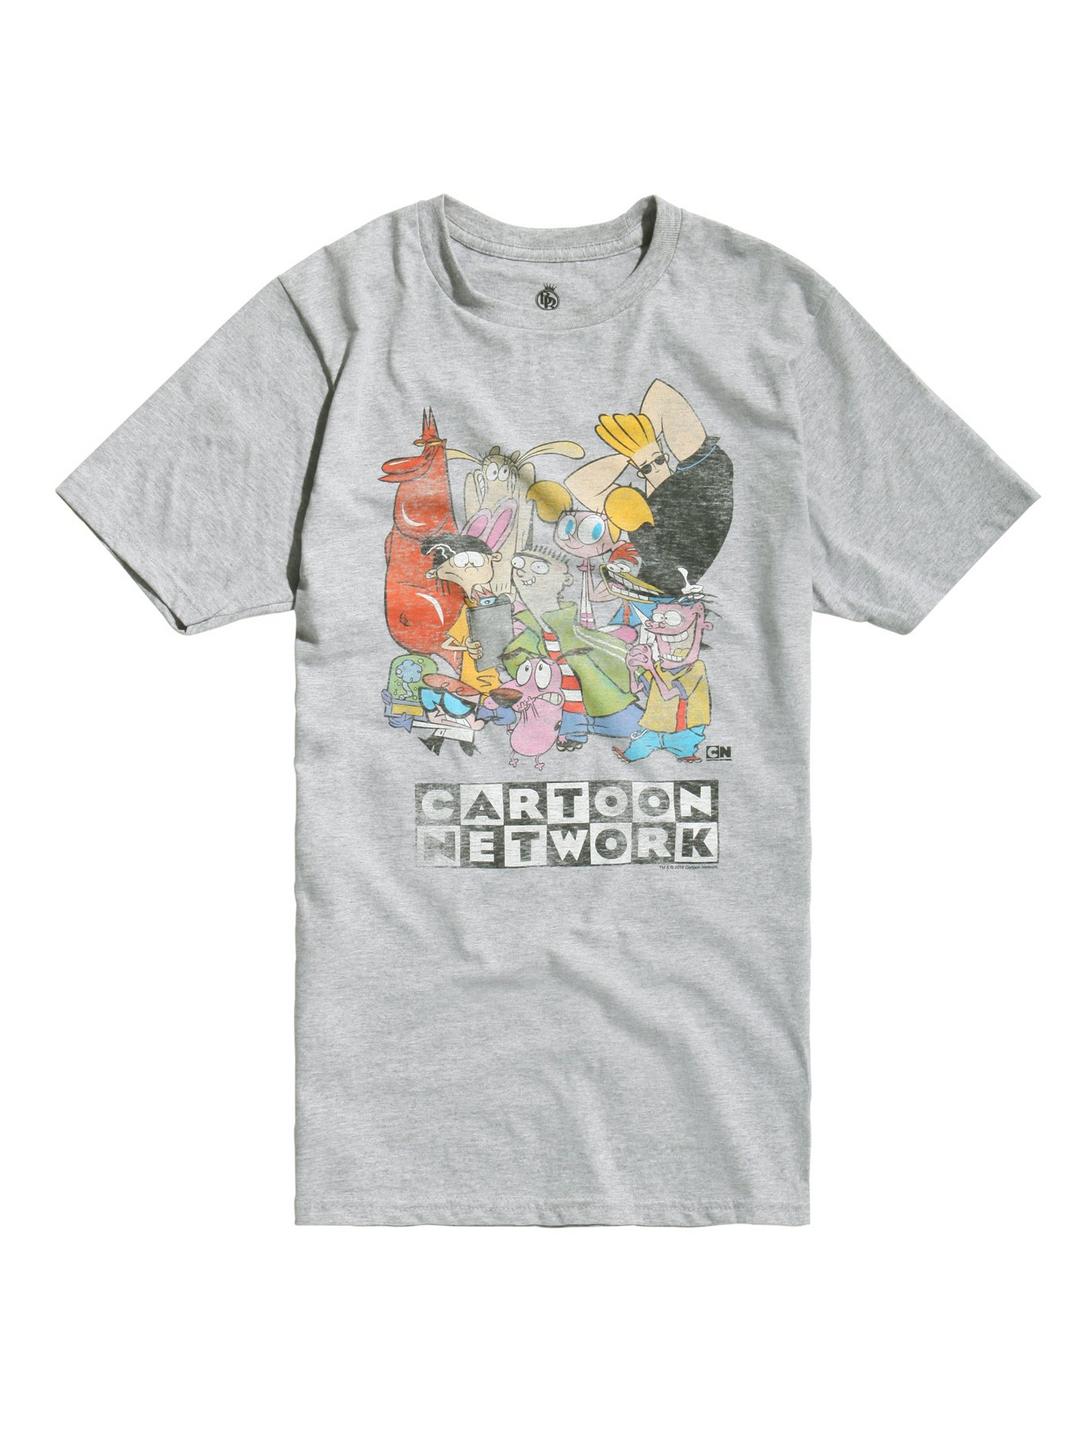 Cartoon Network Group T-Shirt | Hot Topic